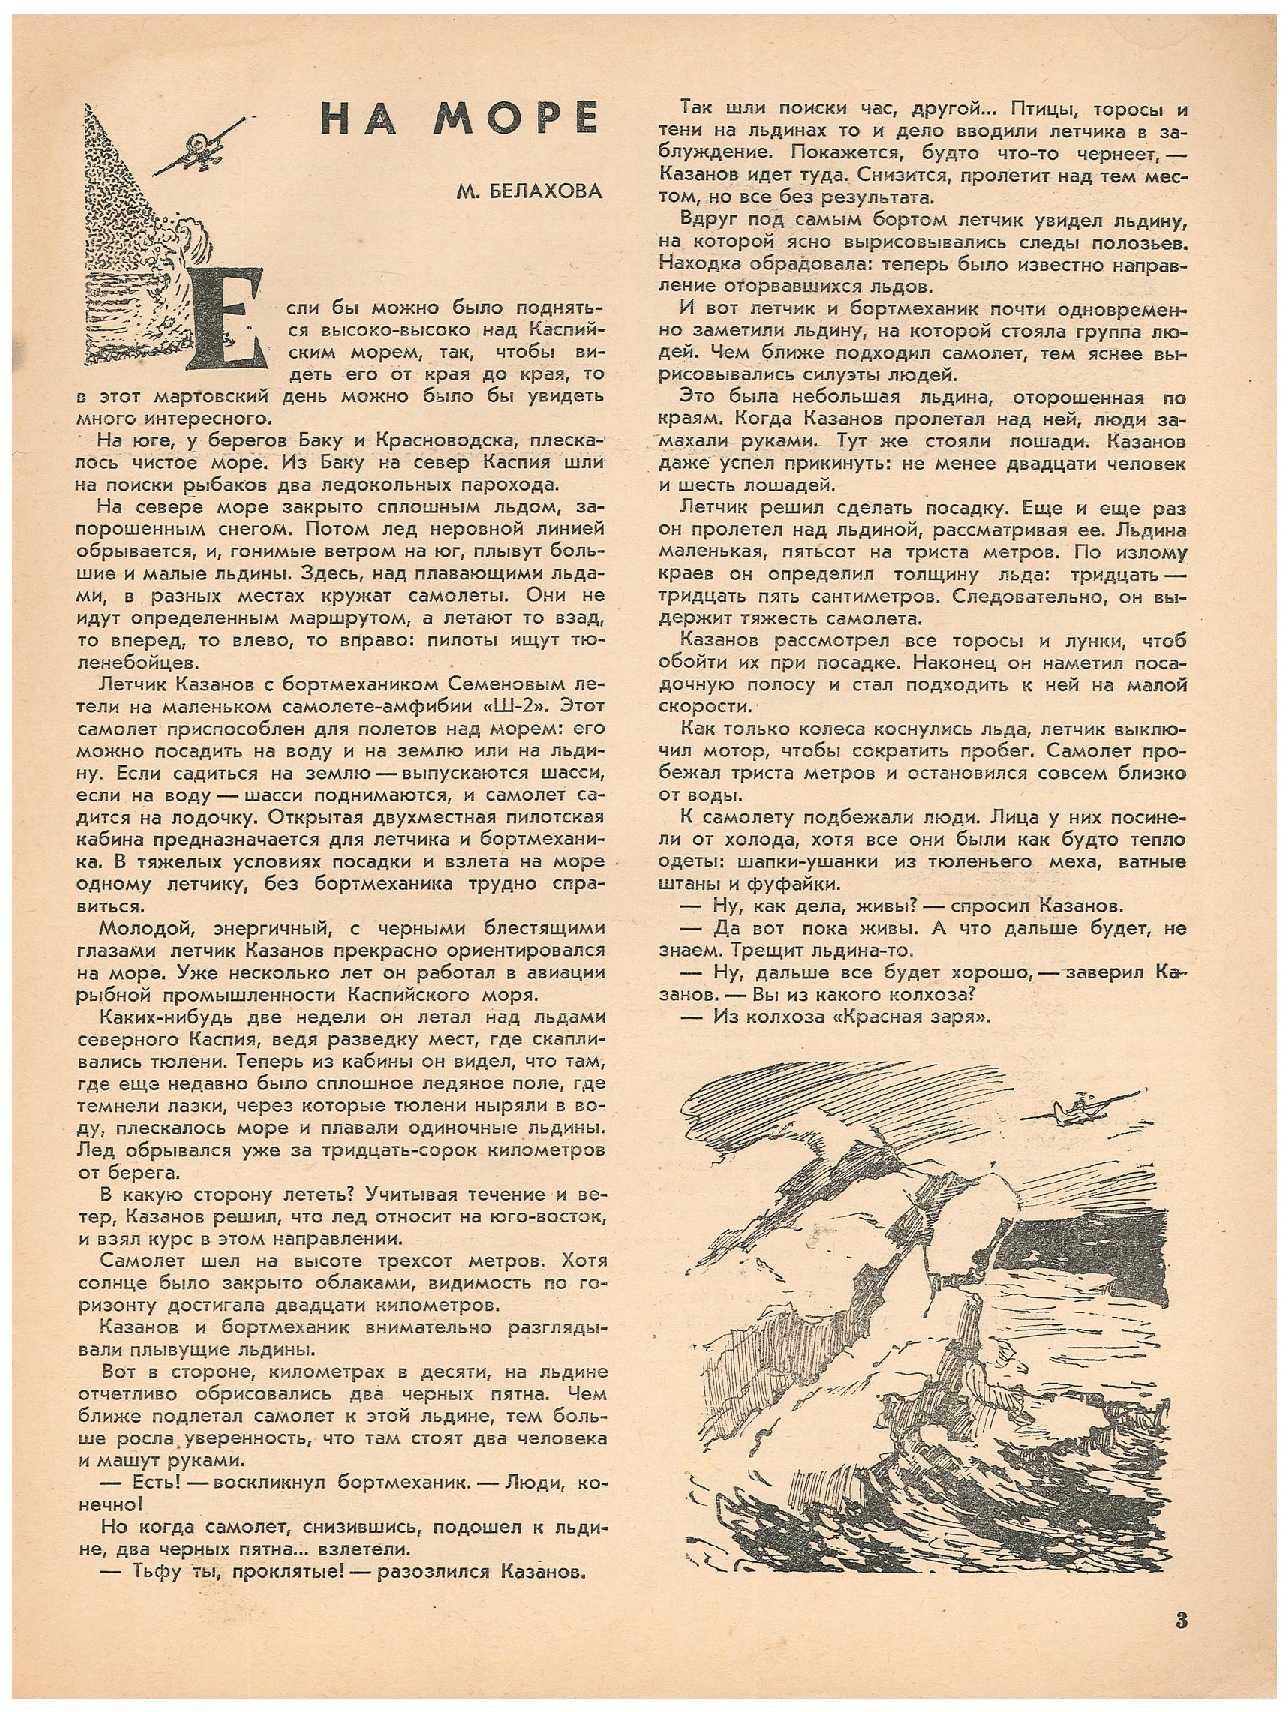 ЮМК 1, 1962, 3 c.